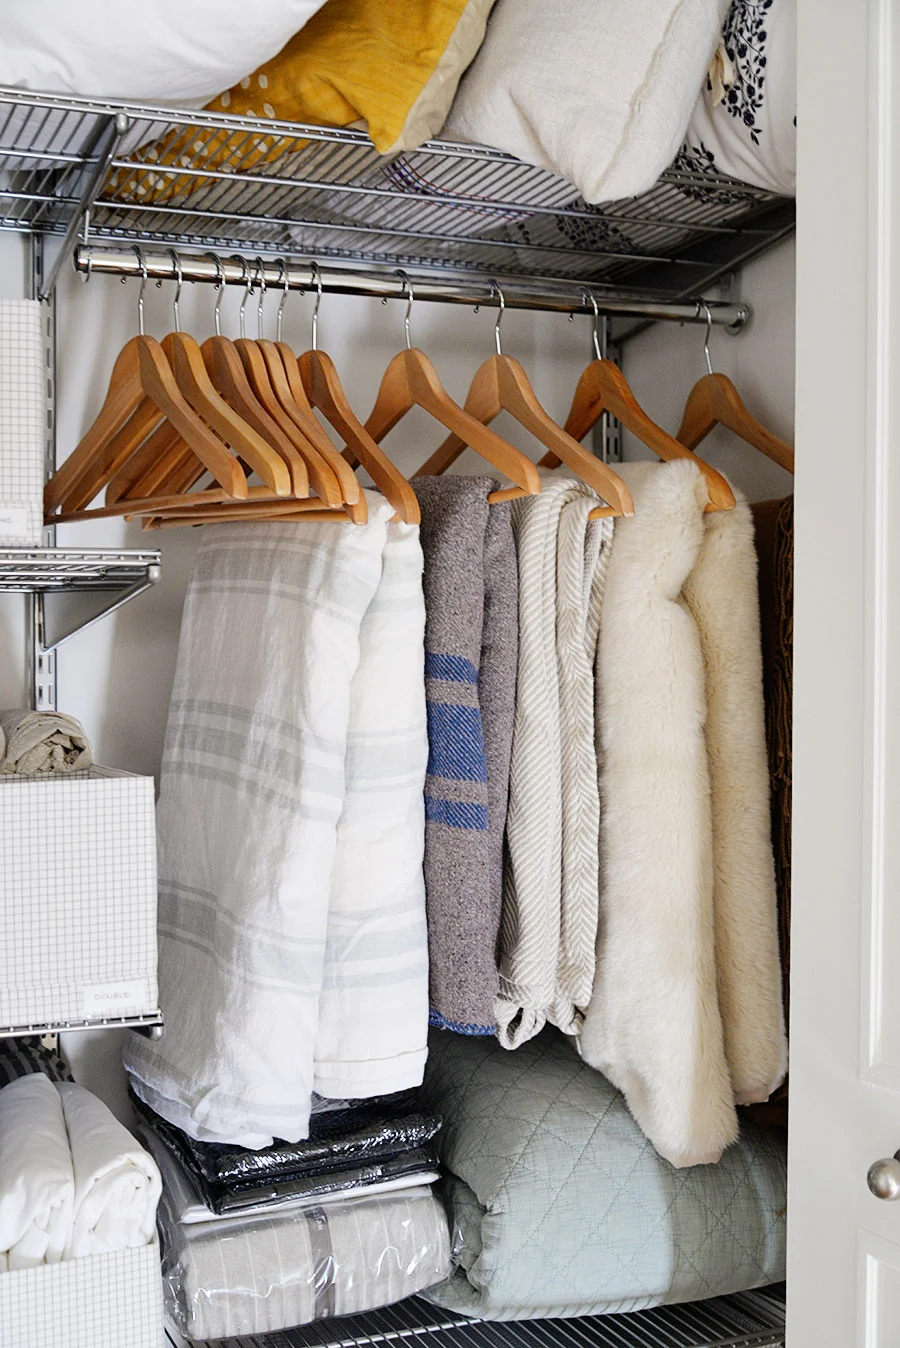 linen closet organization ideas, ideas for linen closet, how to store blankets, blankets on hangers